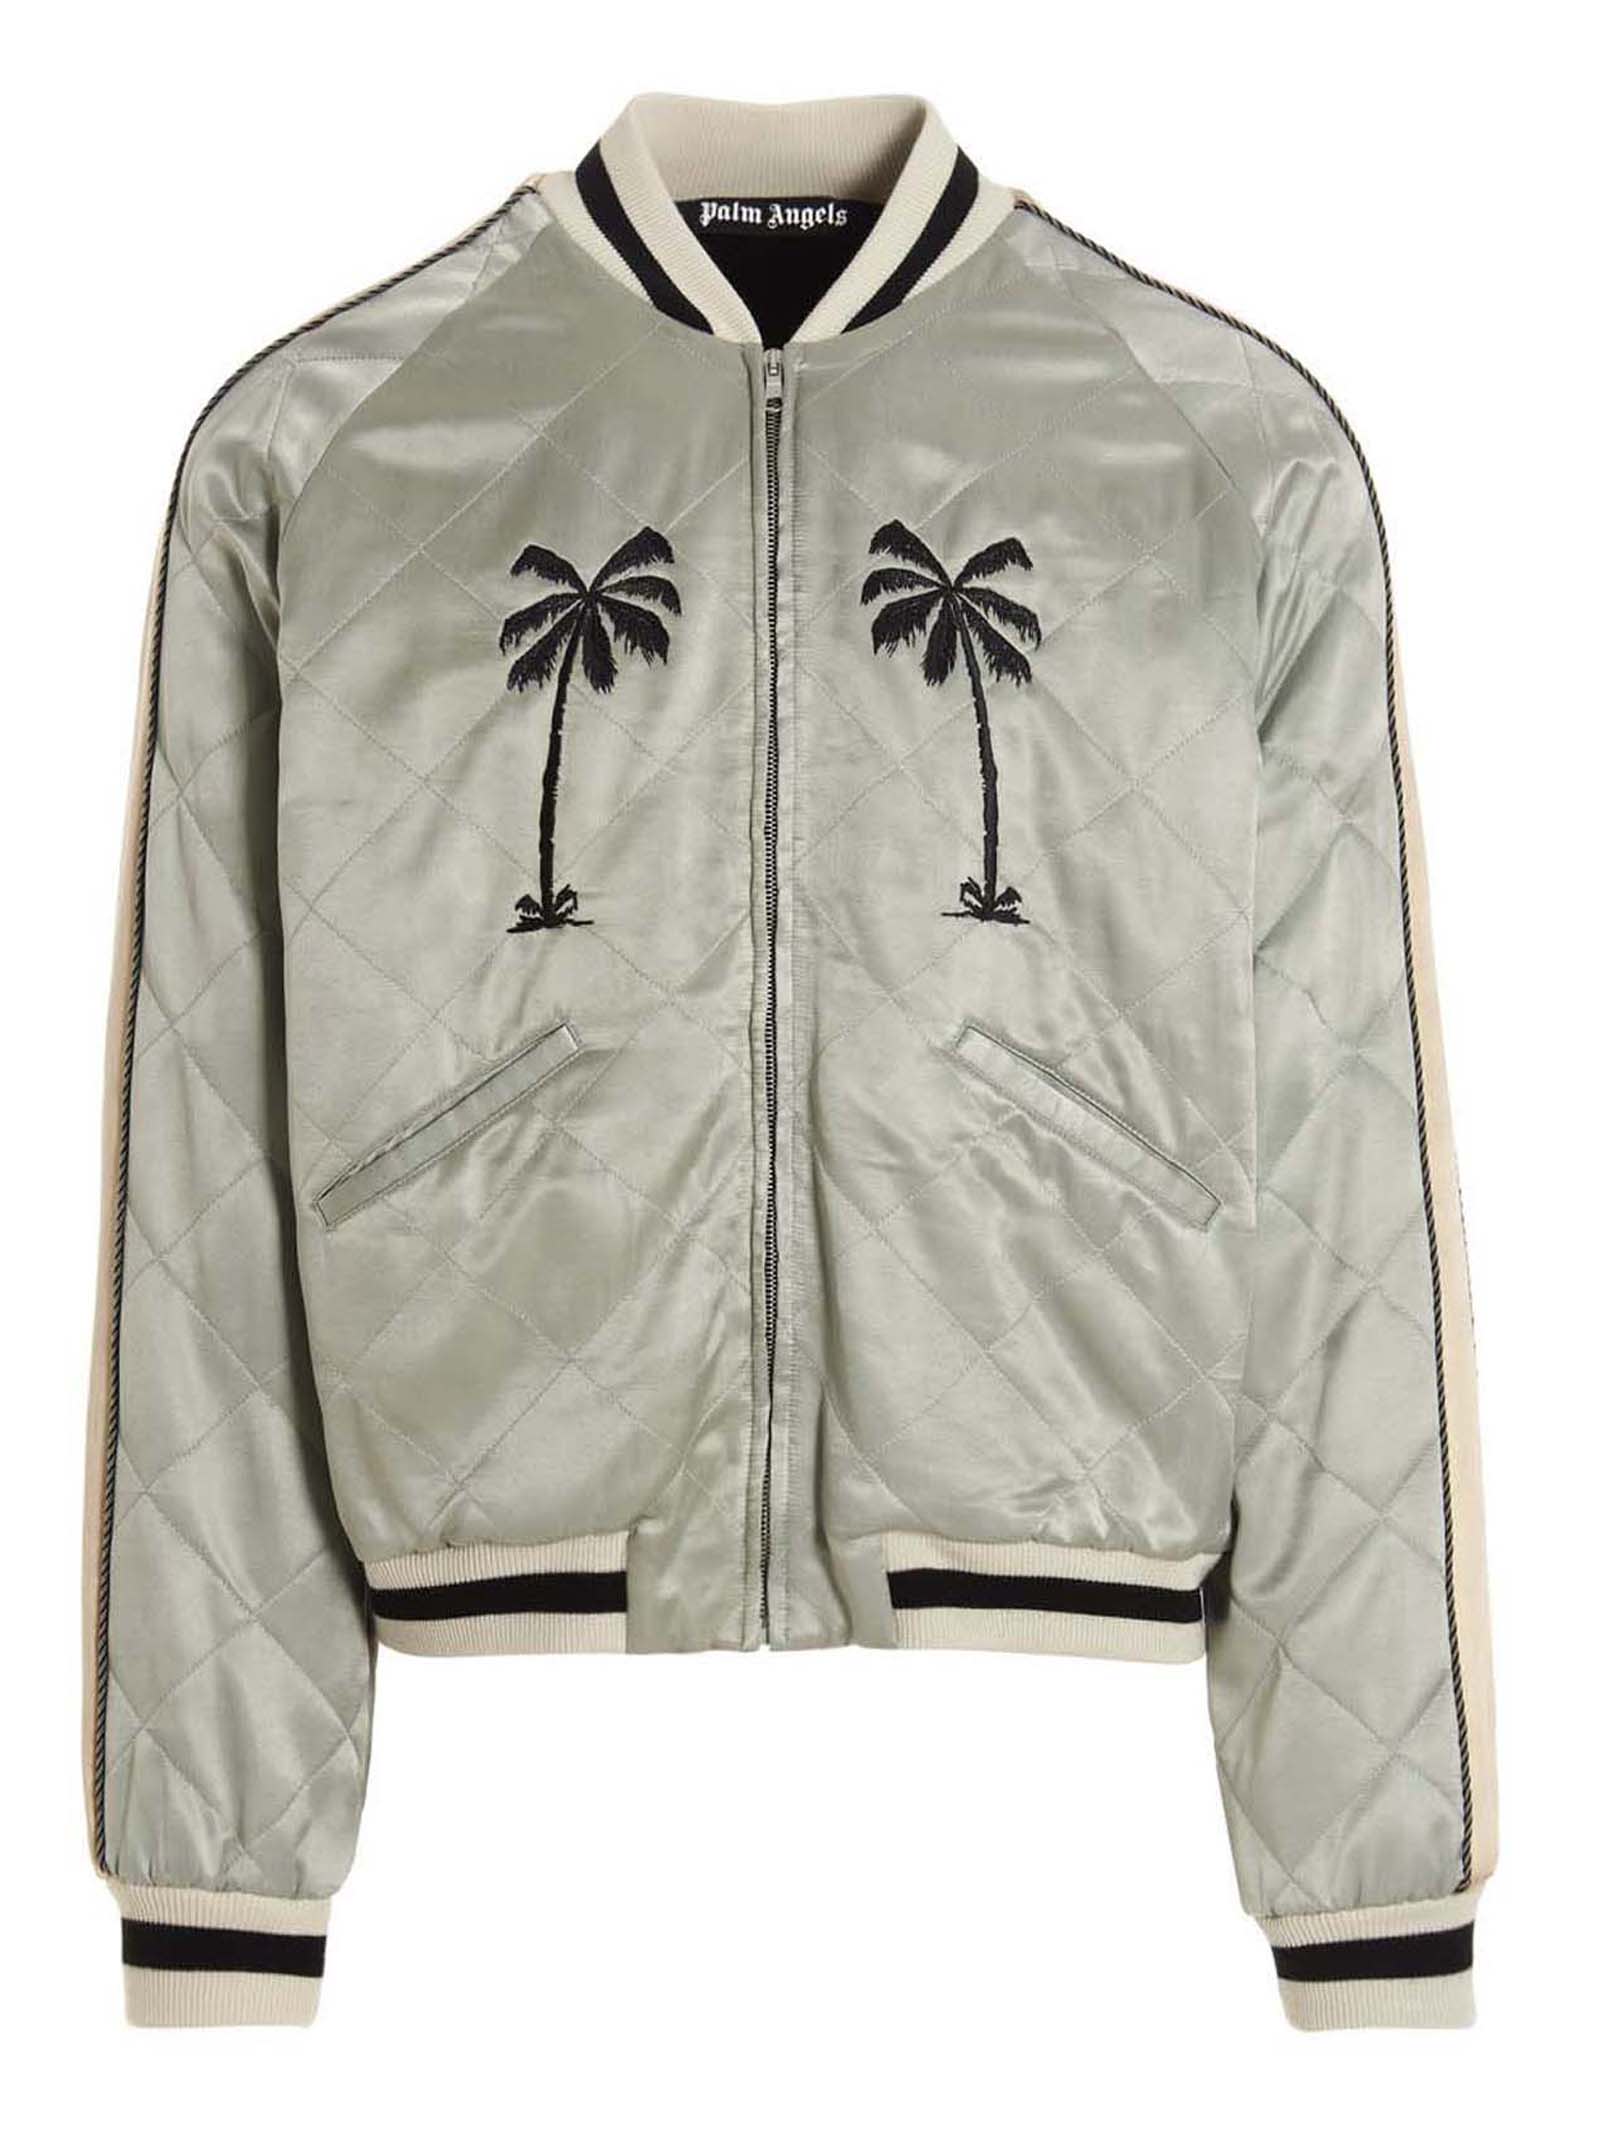 Palm Angels souvenir Bomber Jacket